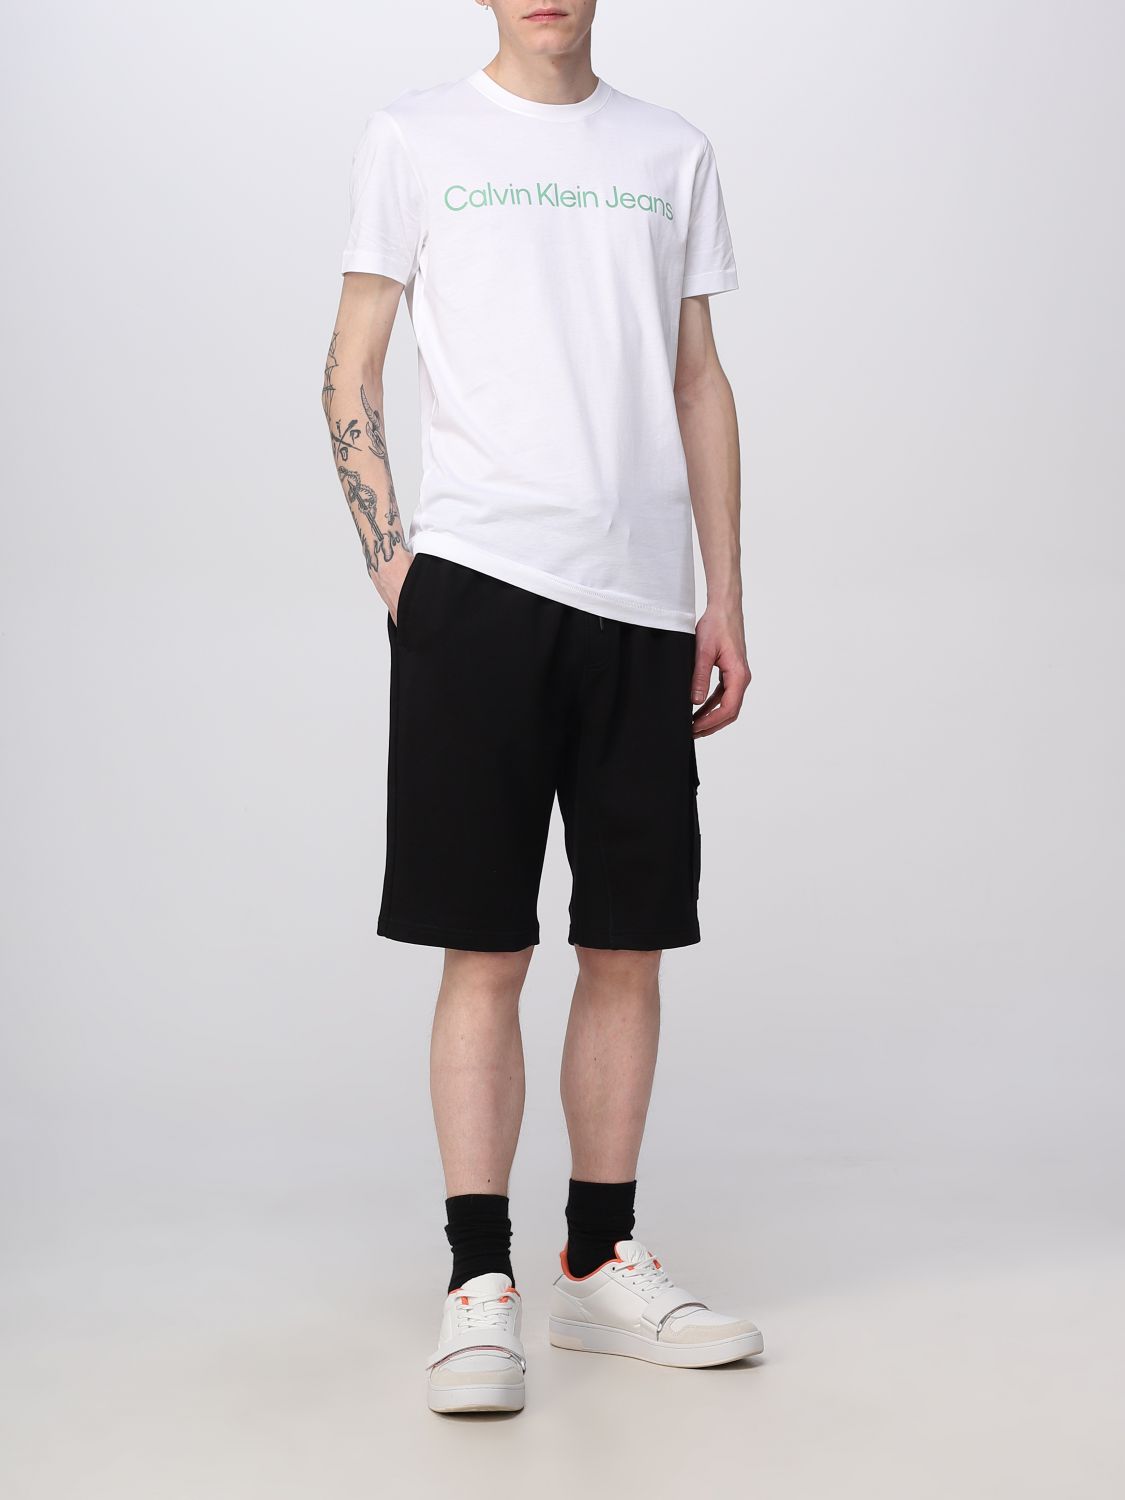 CALVIN KLEIN JEANS: t-shirt for man - White | Calvin Klein Jeans t ...